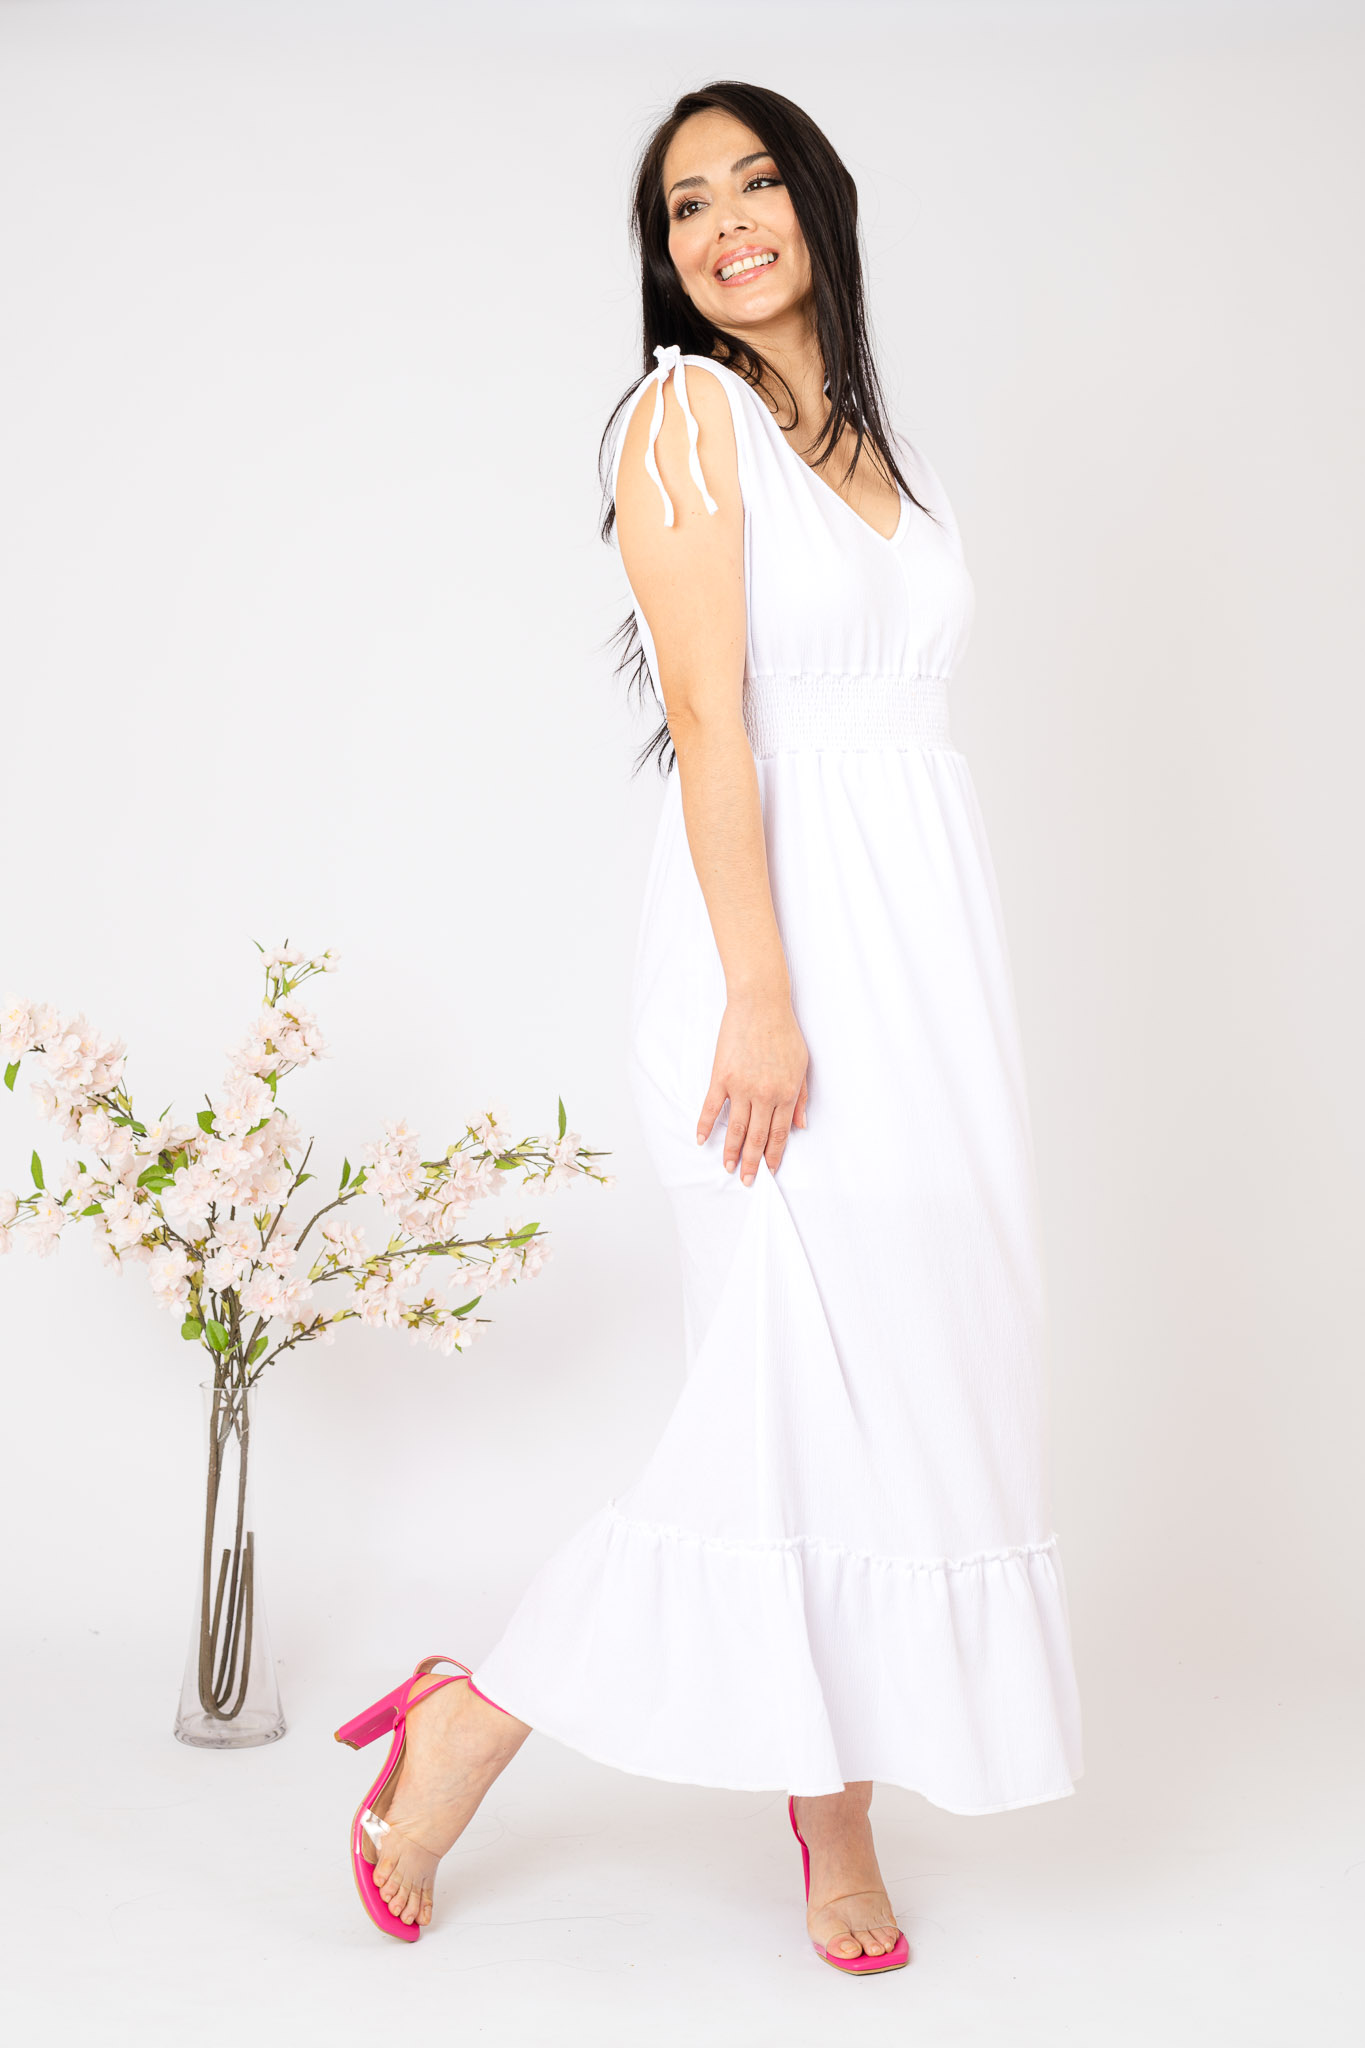 Vestido de tela rayón texturado  , con lindo detalle en la manga 

Disponible en talla S M L
La modelo exhibe la talla S
